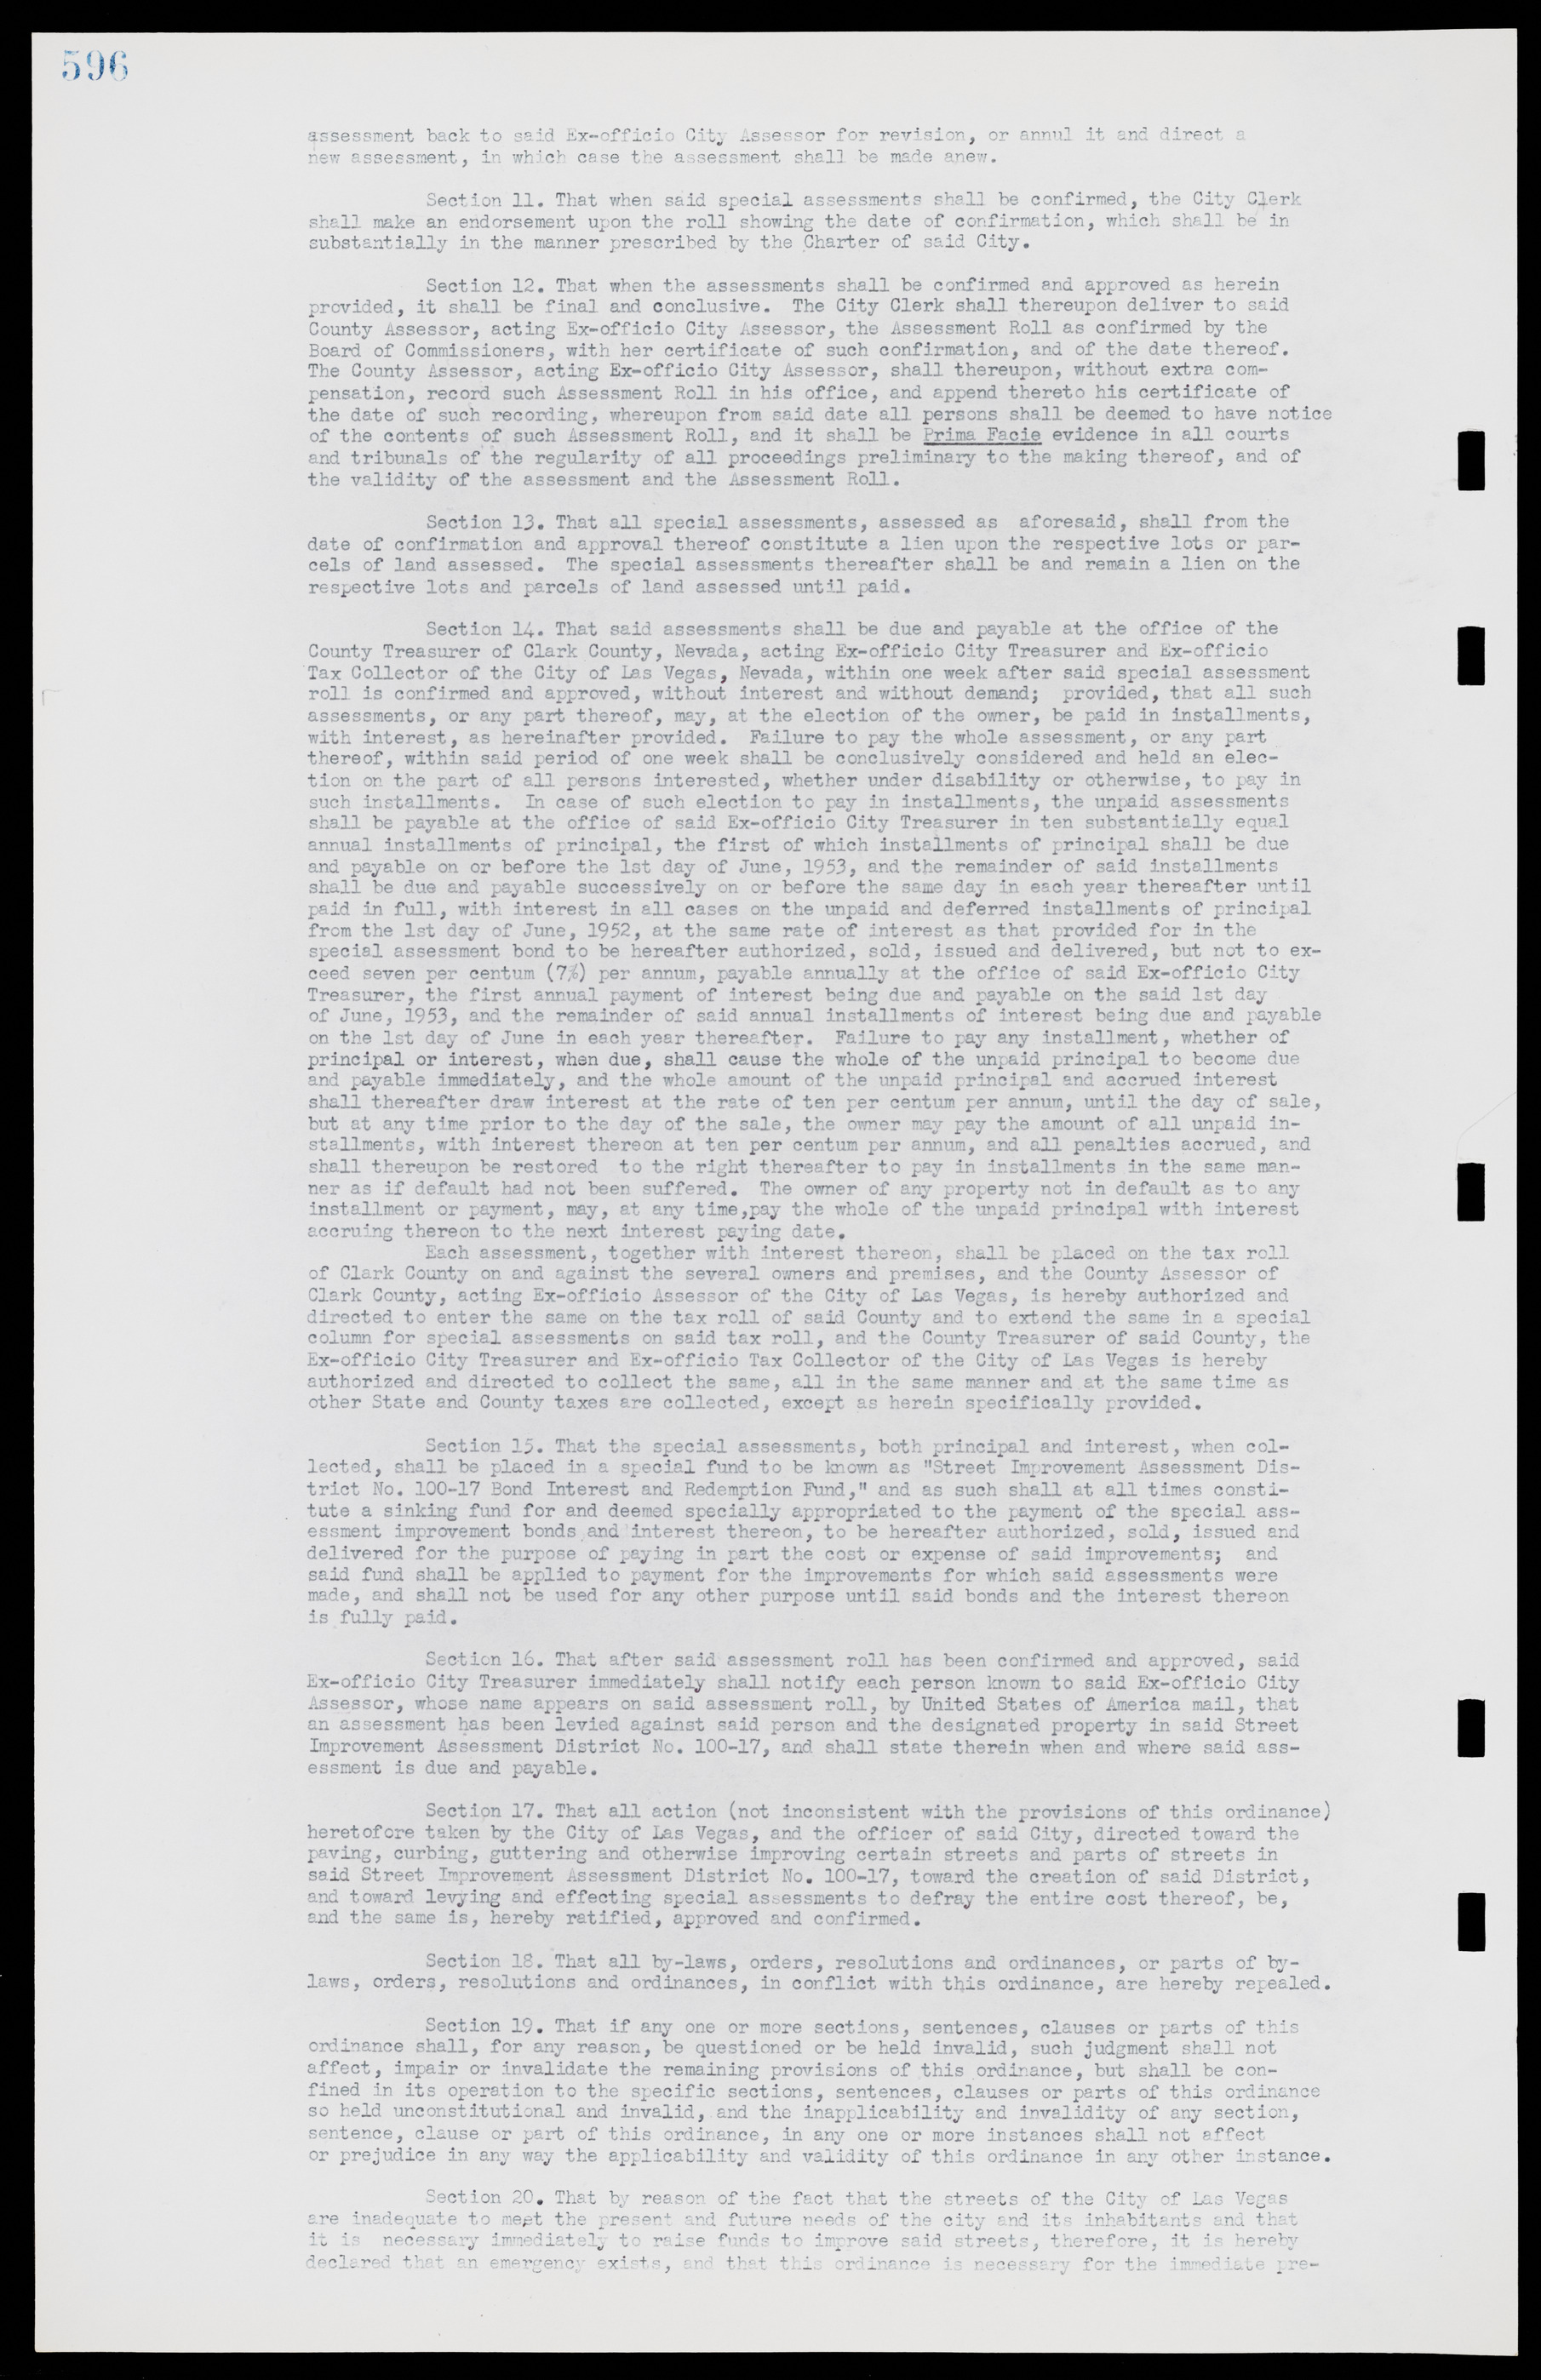 Las Vegas City Commission Minutes, November 7, 1949 to May 21, 1952, lvc000007-614